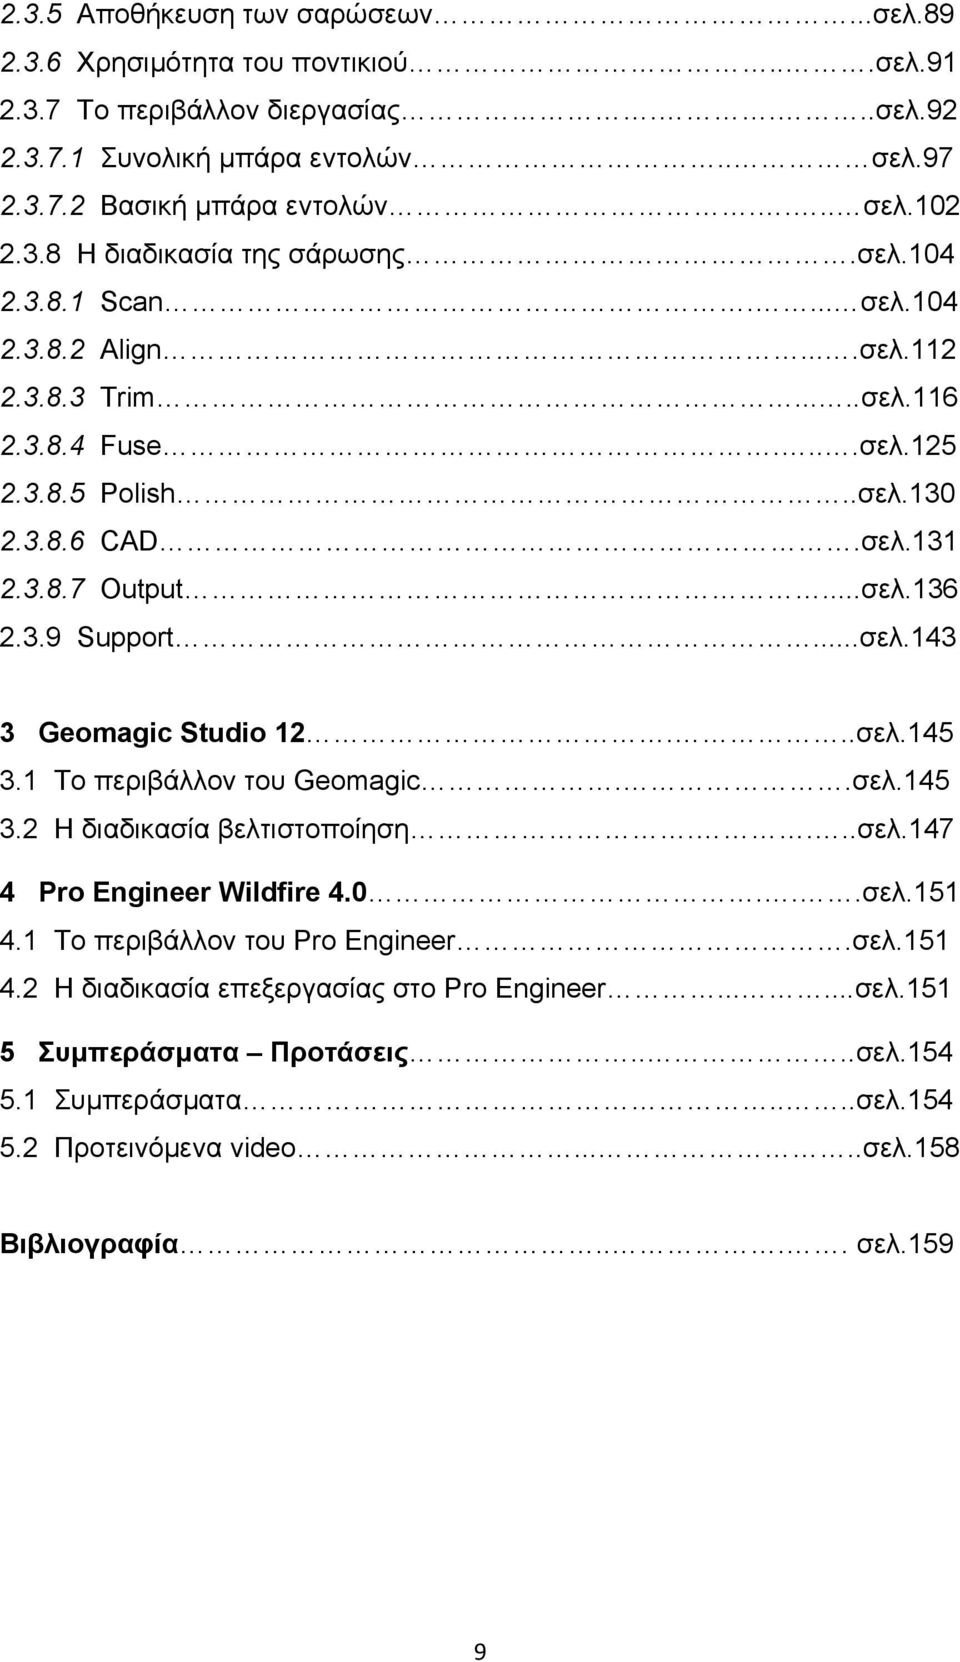 3.9 Support...σελ.143 3 Geomagic Studio 12...σελ.145 3.1 Το περιβάλλον του Geomagic..σελ.145 3.2 Η διαδικασία βελτιστοποίηση....σελ.147 4 Pro Engineer Wildfire 4.0...σελ.151 4.